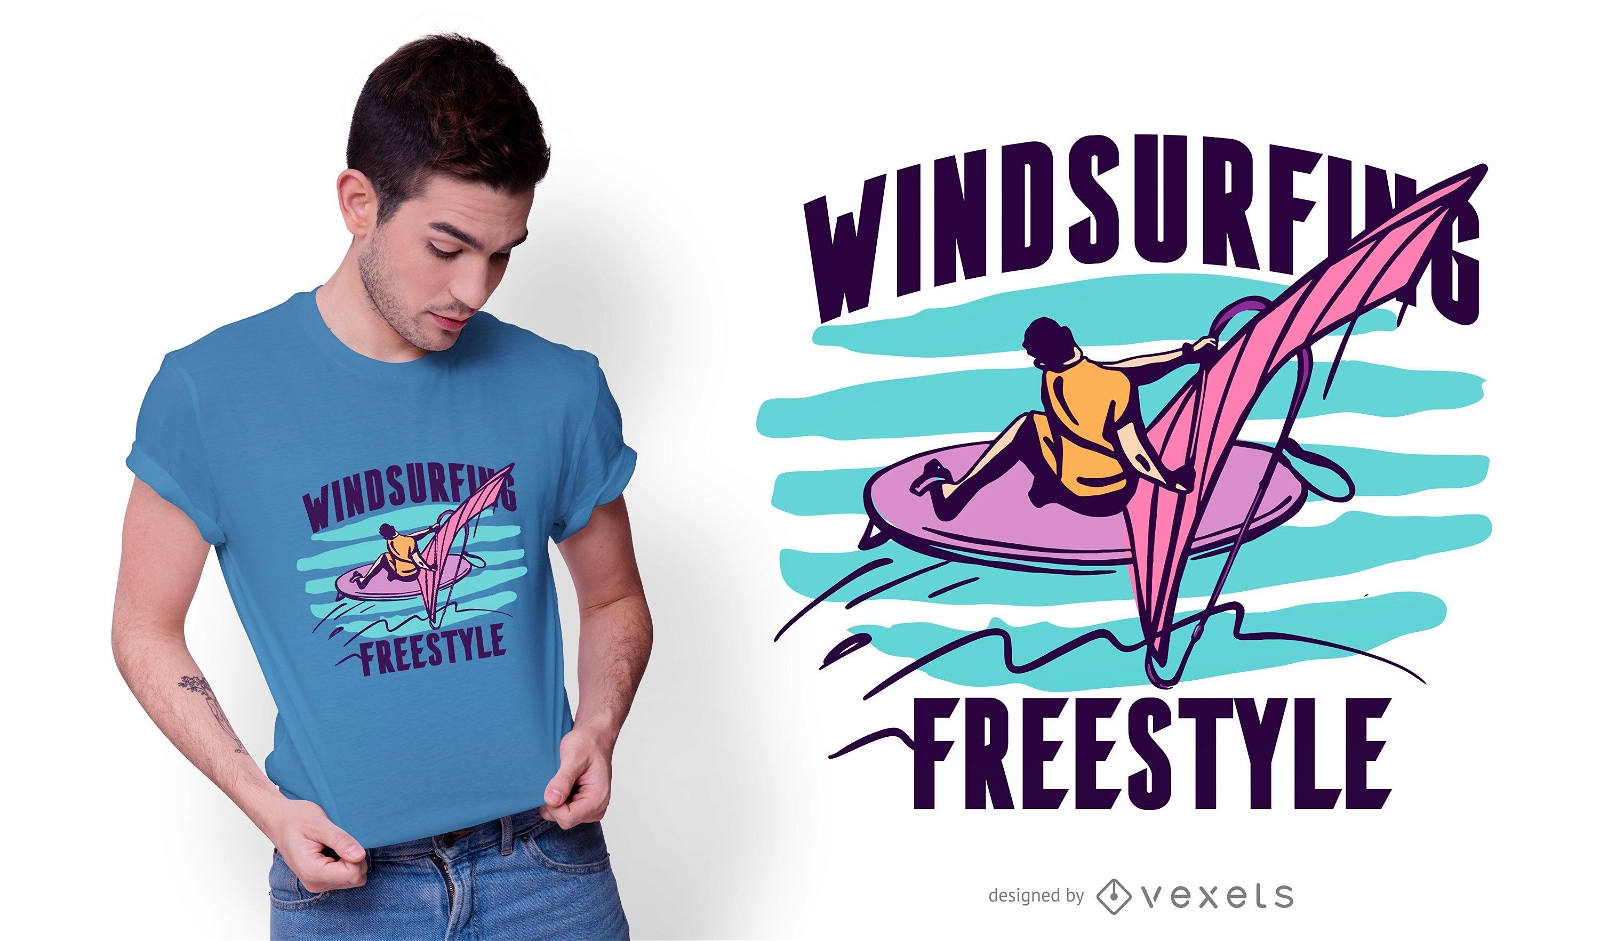 Windsurfing freestyle t-shirt design